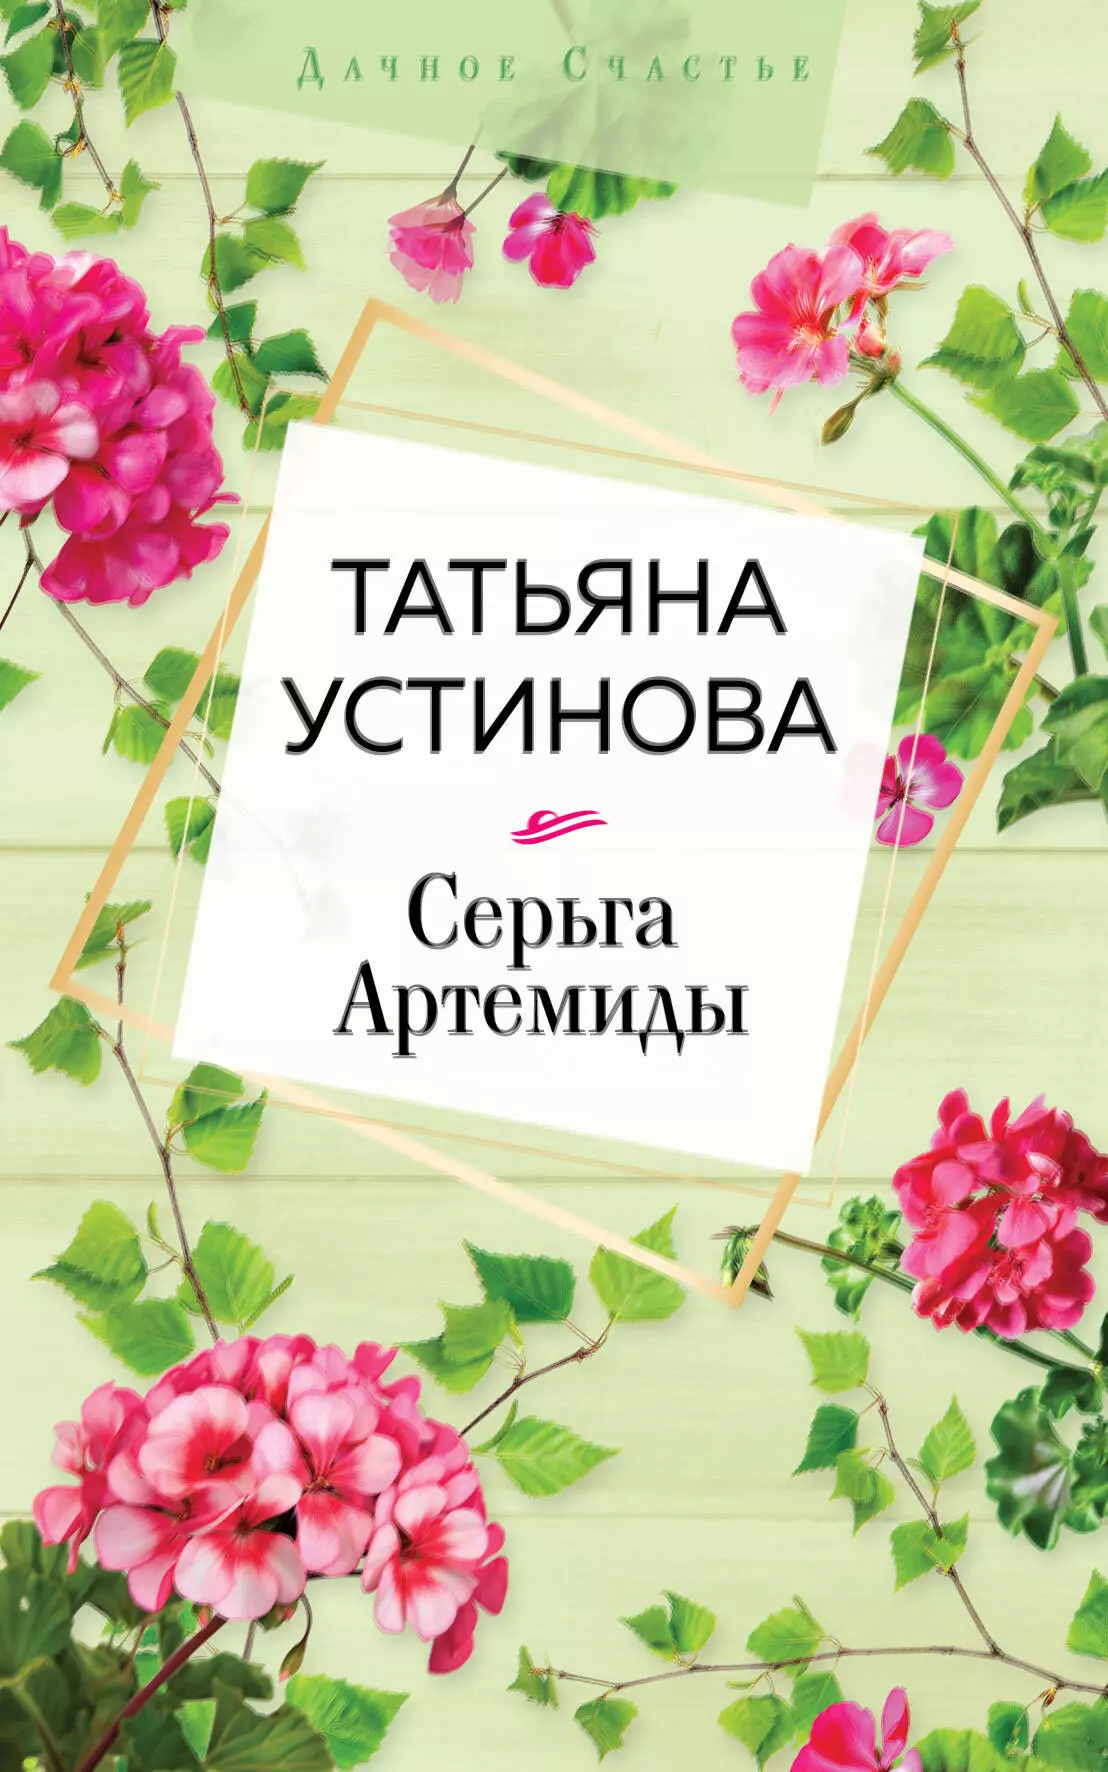 Устинова Татьяна Витальевна - Серьга Артемиды